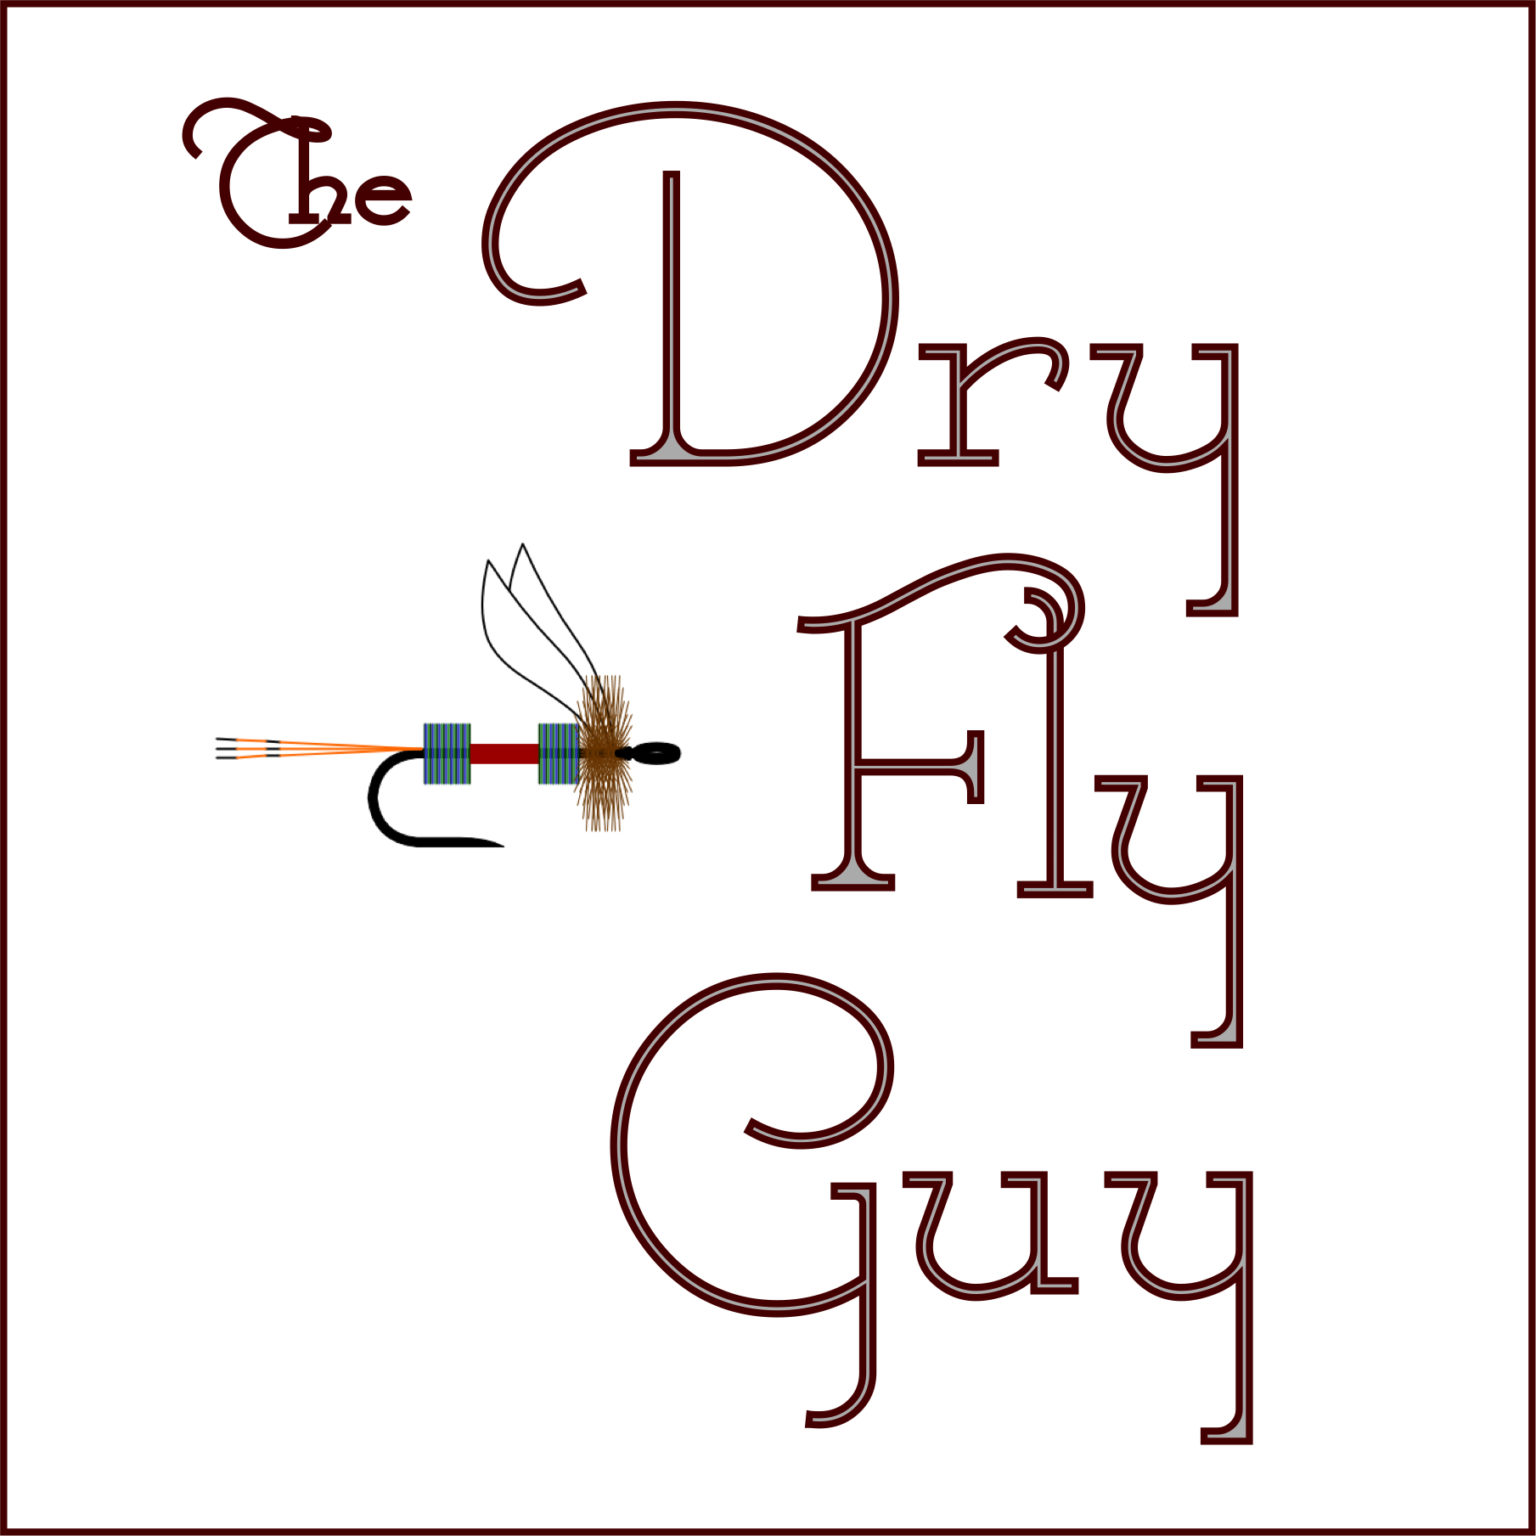 The Dry FlyGuy